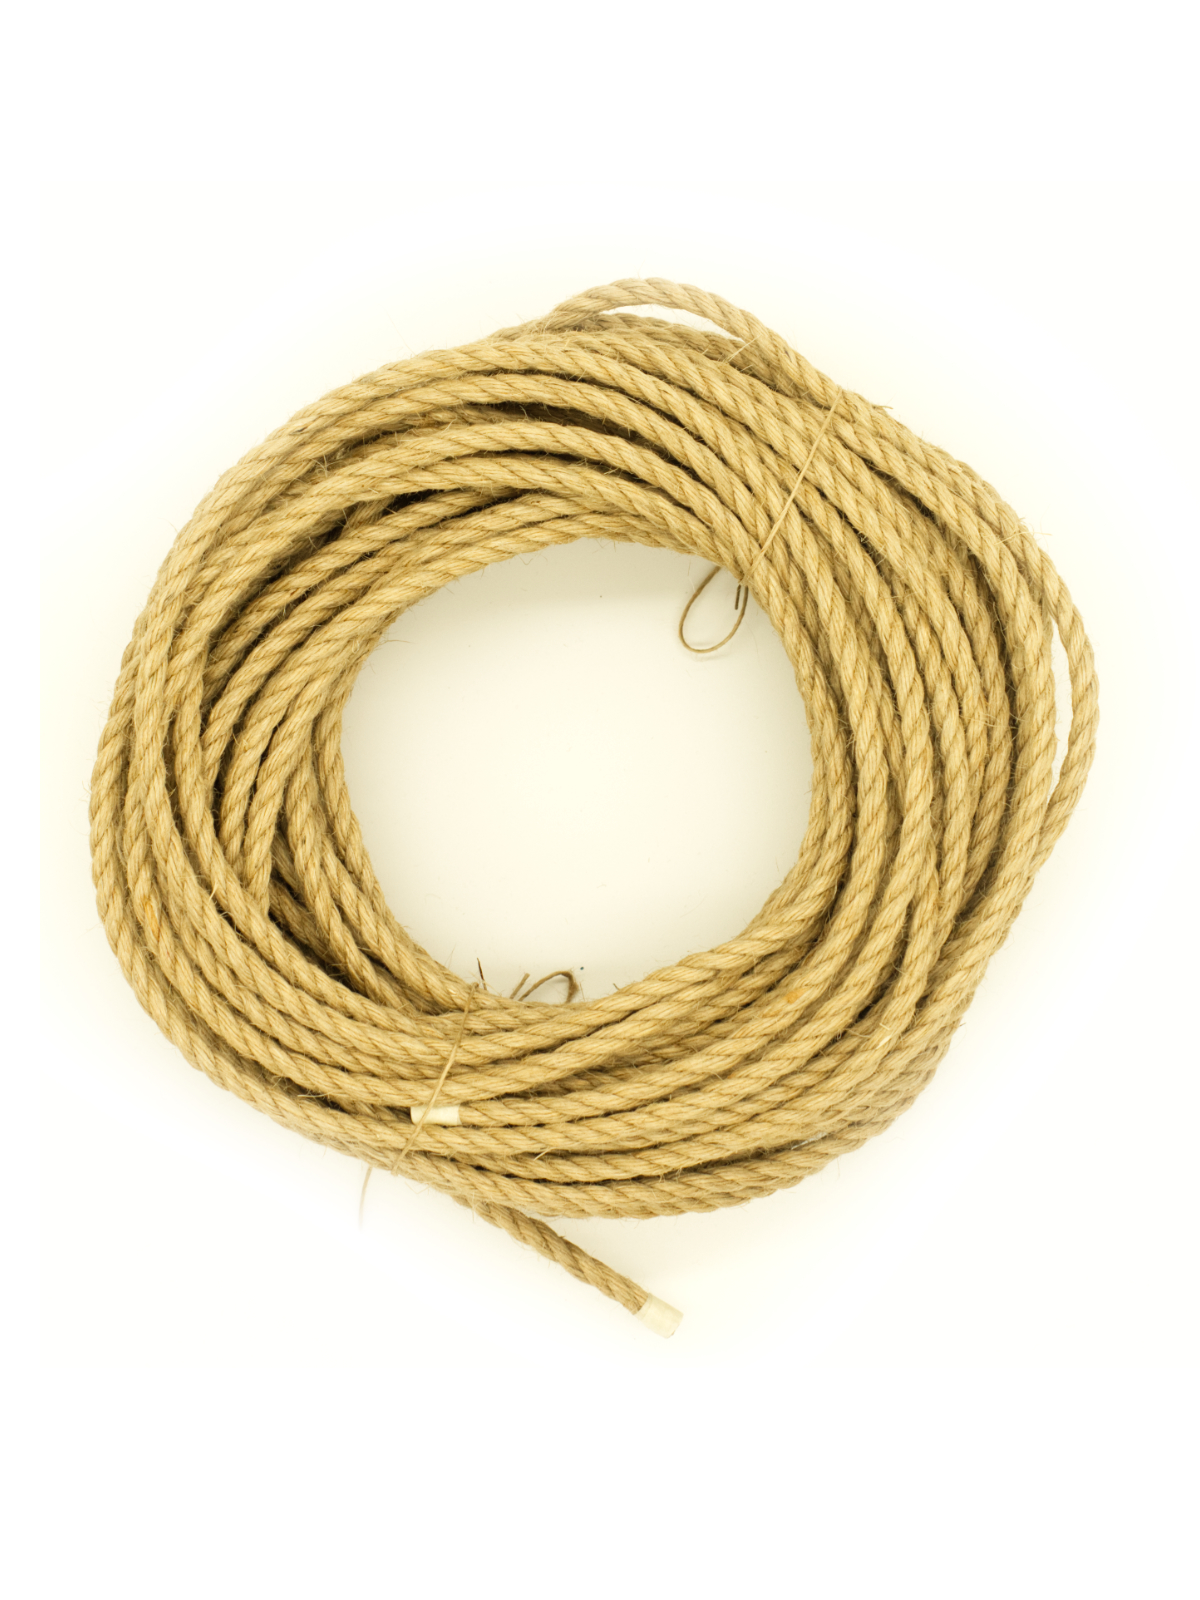 100m, ∅ 6mm raw jute rope, AMATSUNAWA 33, JBO-free, for DIY processing